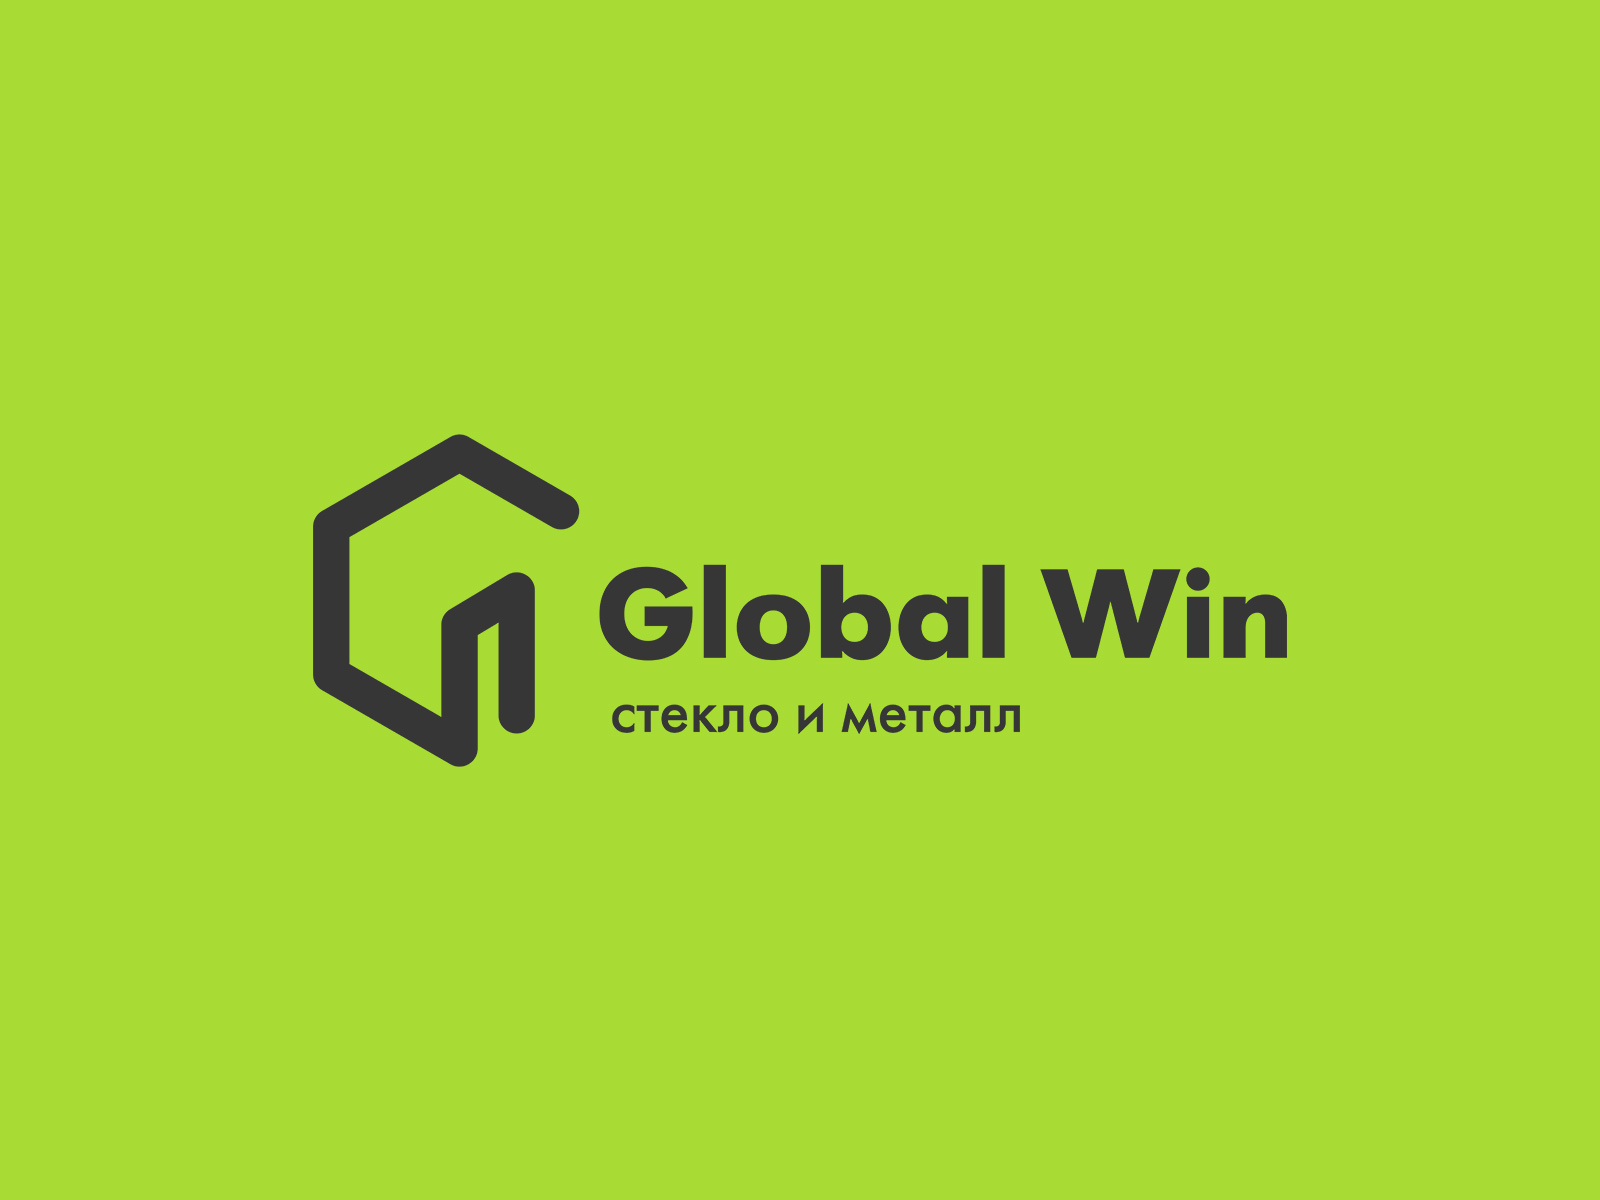 Global Win company logo